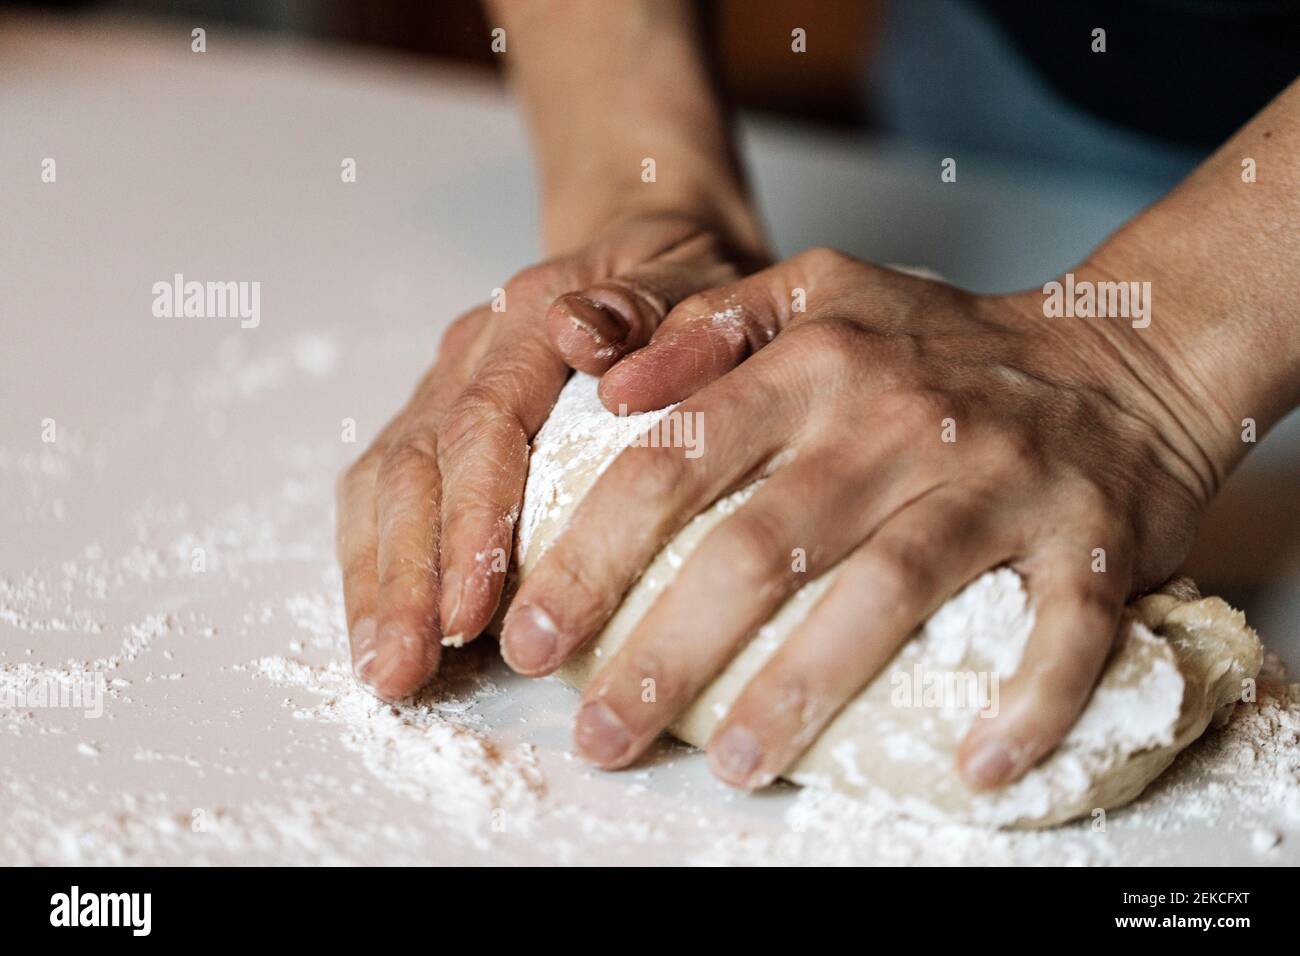 Woman kneading dough for cinnamon rolls Stock Photo